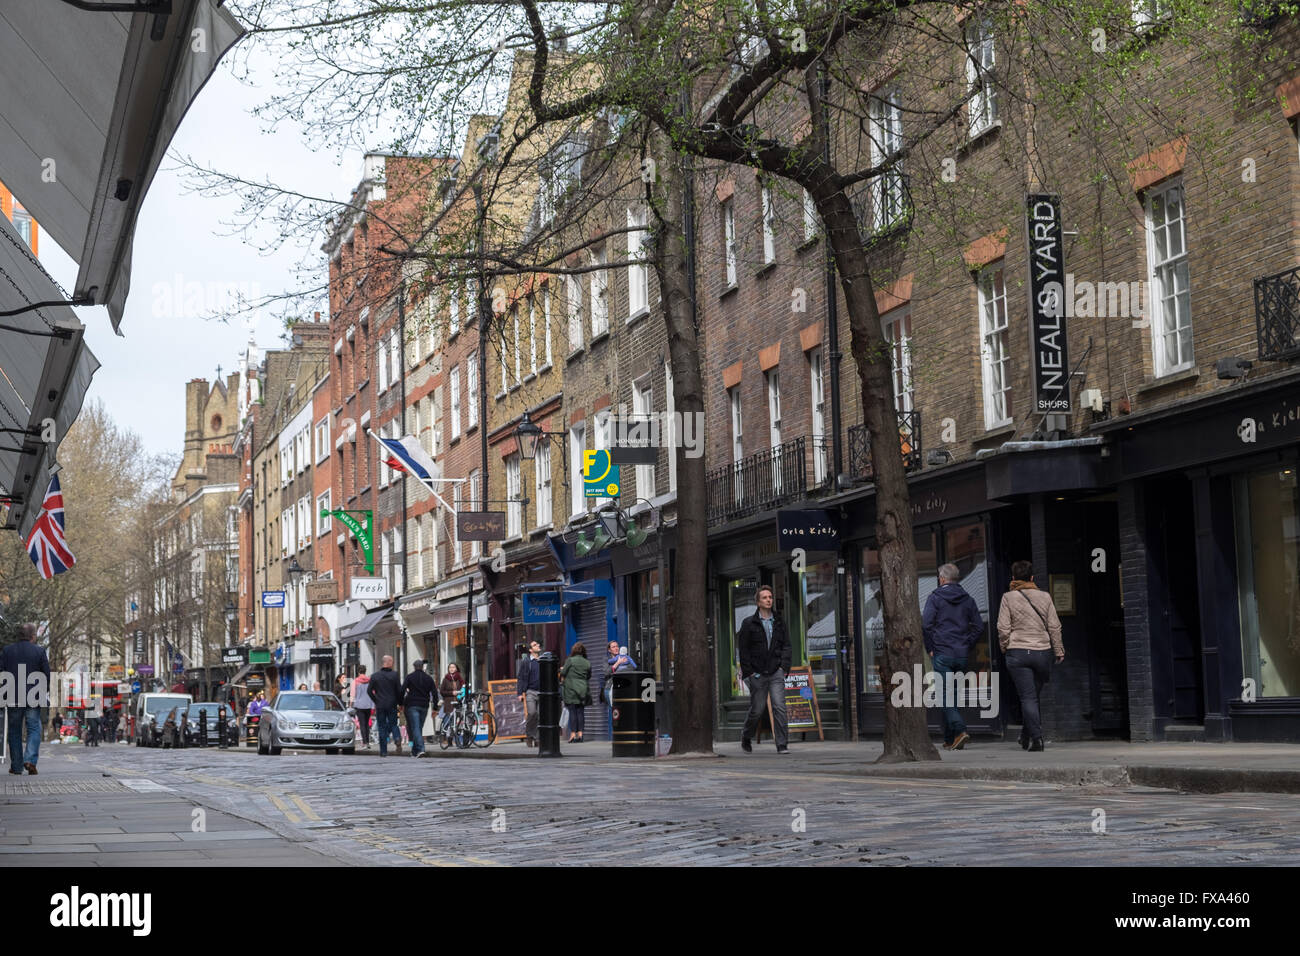 Streetscene near Neal's Yard, Covent Garden London Stock Photo